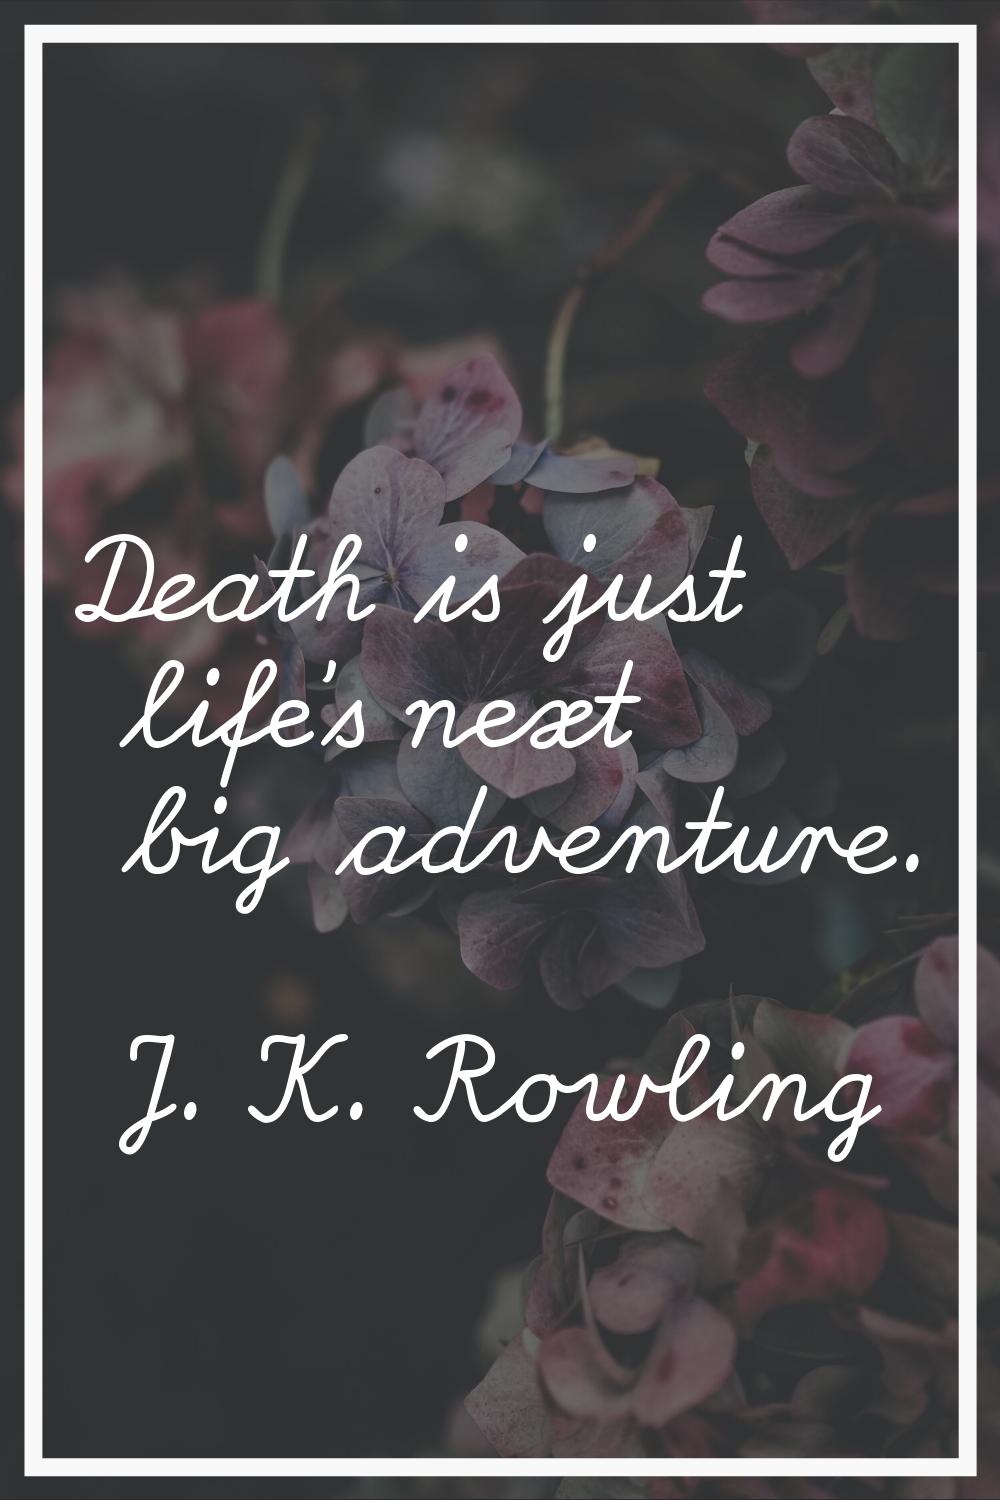 Death is just life's next big adventure.